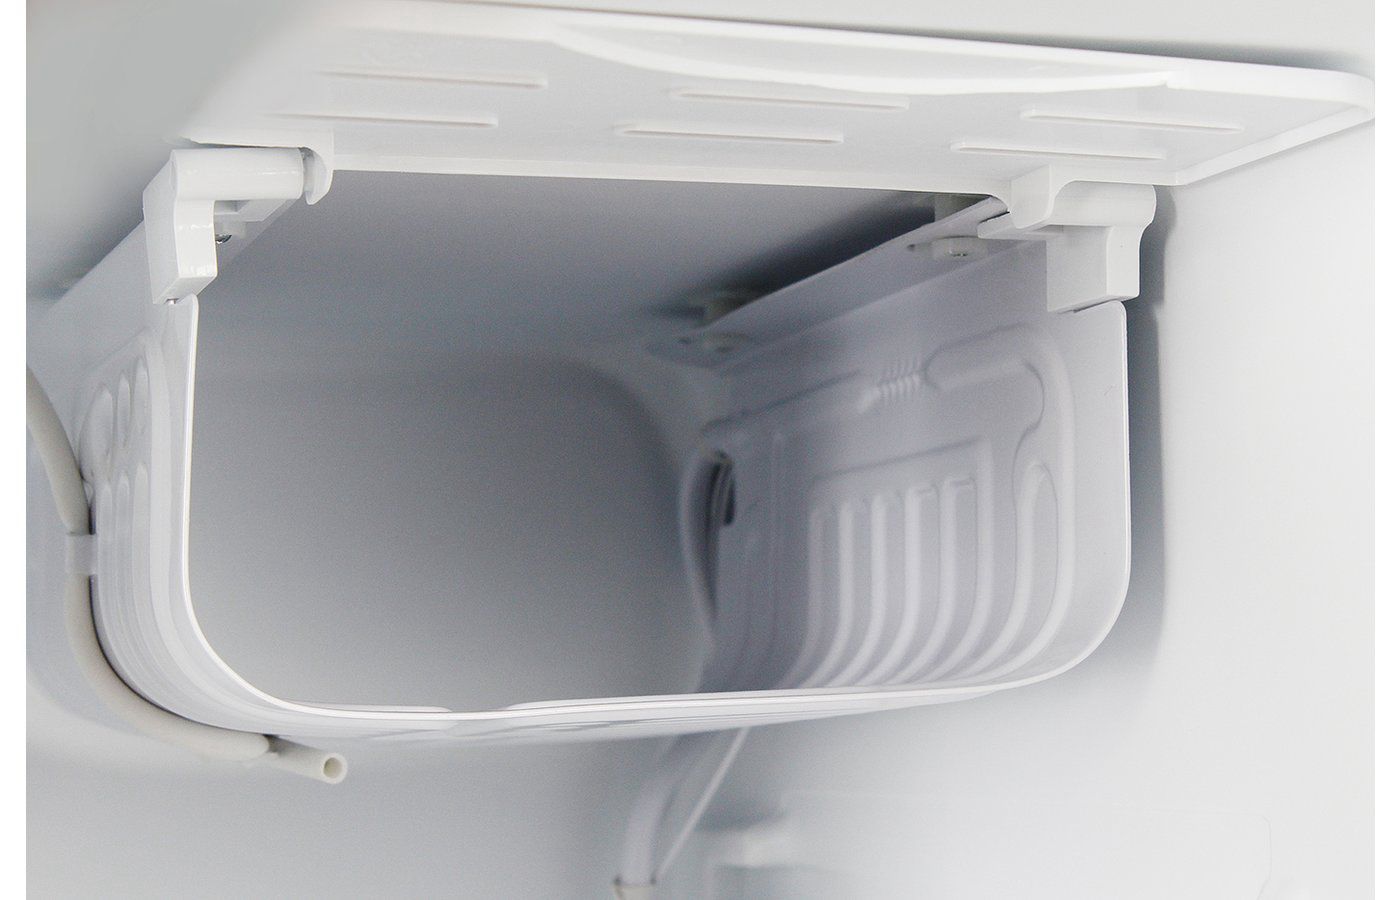 холодильник bosfor rf-063, купить в Красноярске холодильник bosfor rf-063,  купить в Красноярске дешево холодильник bosfor rf-063, купить в Красноярске минимальной цене холодильник bosfor rf-063